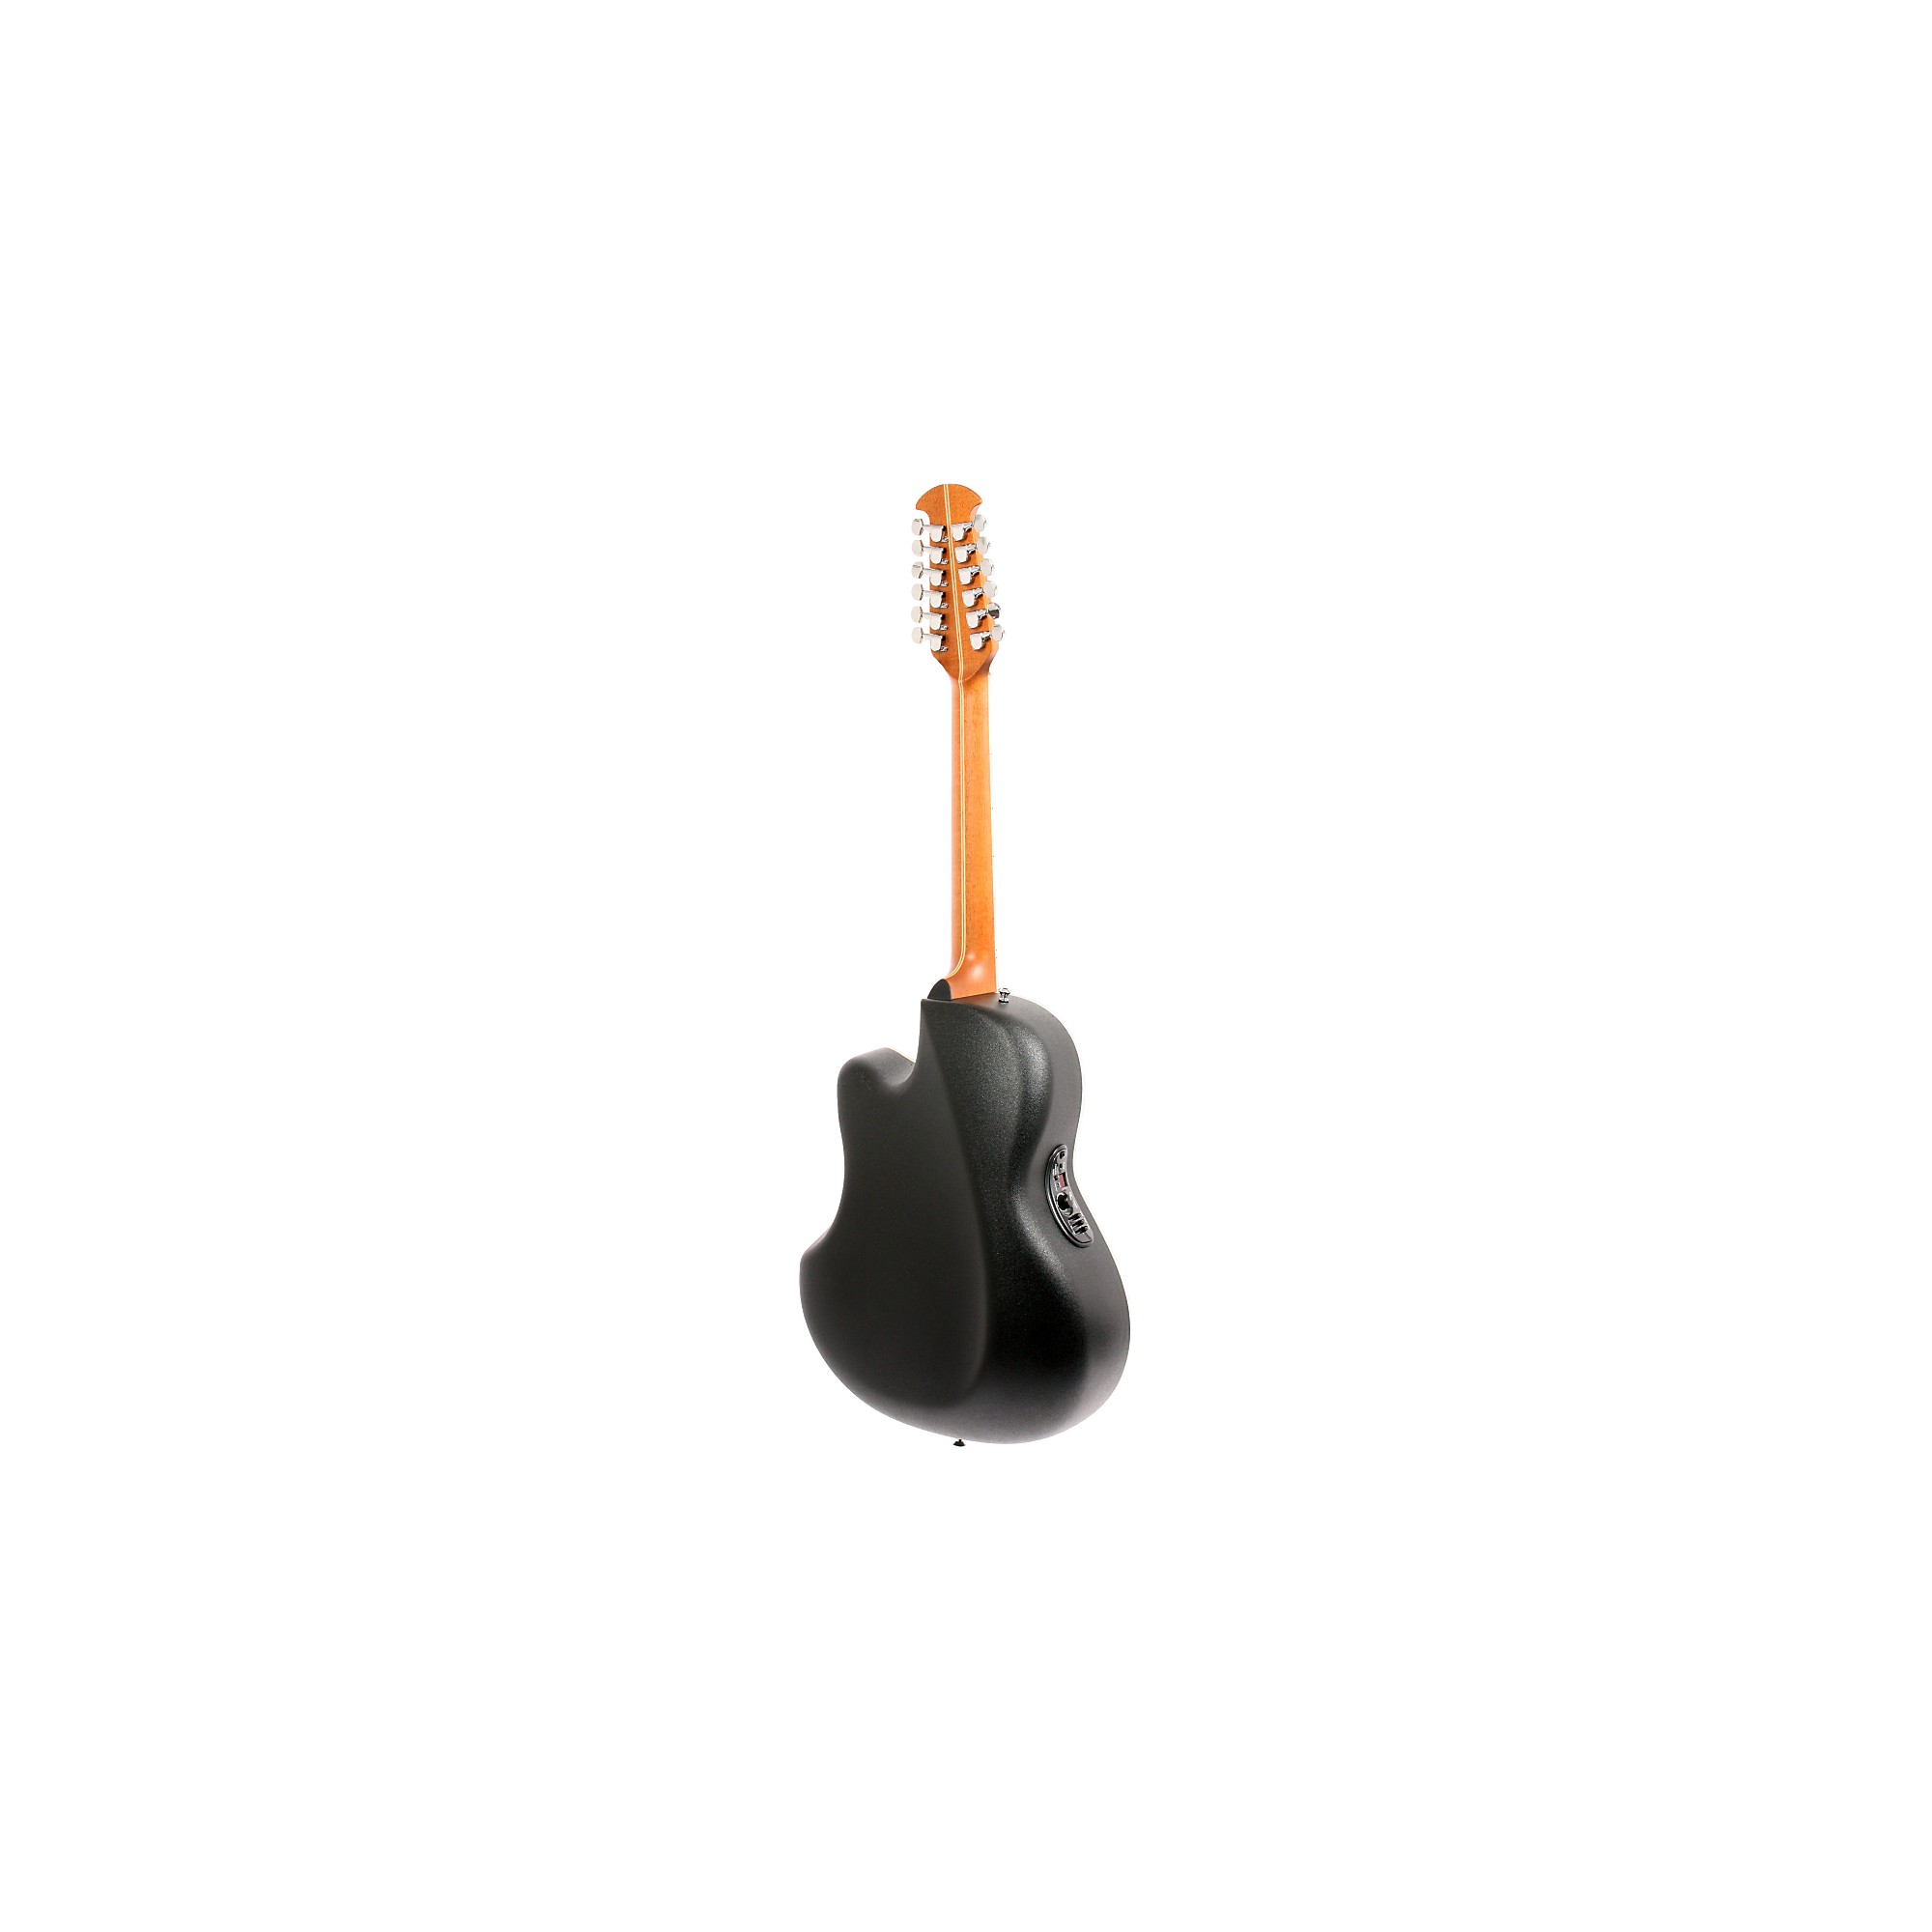 Ovation Standard Balladeer 2751 AX 12-струнная акусто-электрическая гитара, черная электроакустическая гитара ovation main stage balladeer 1771stg es ebony stain